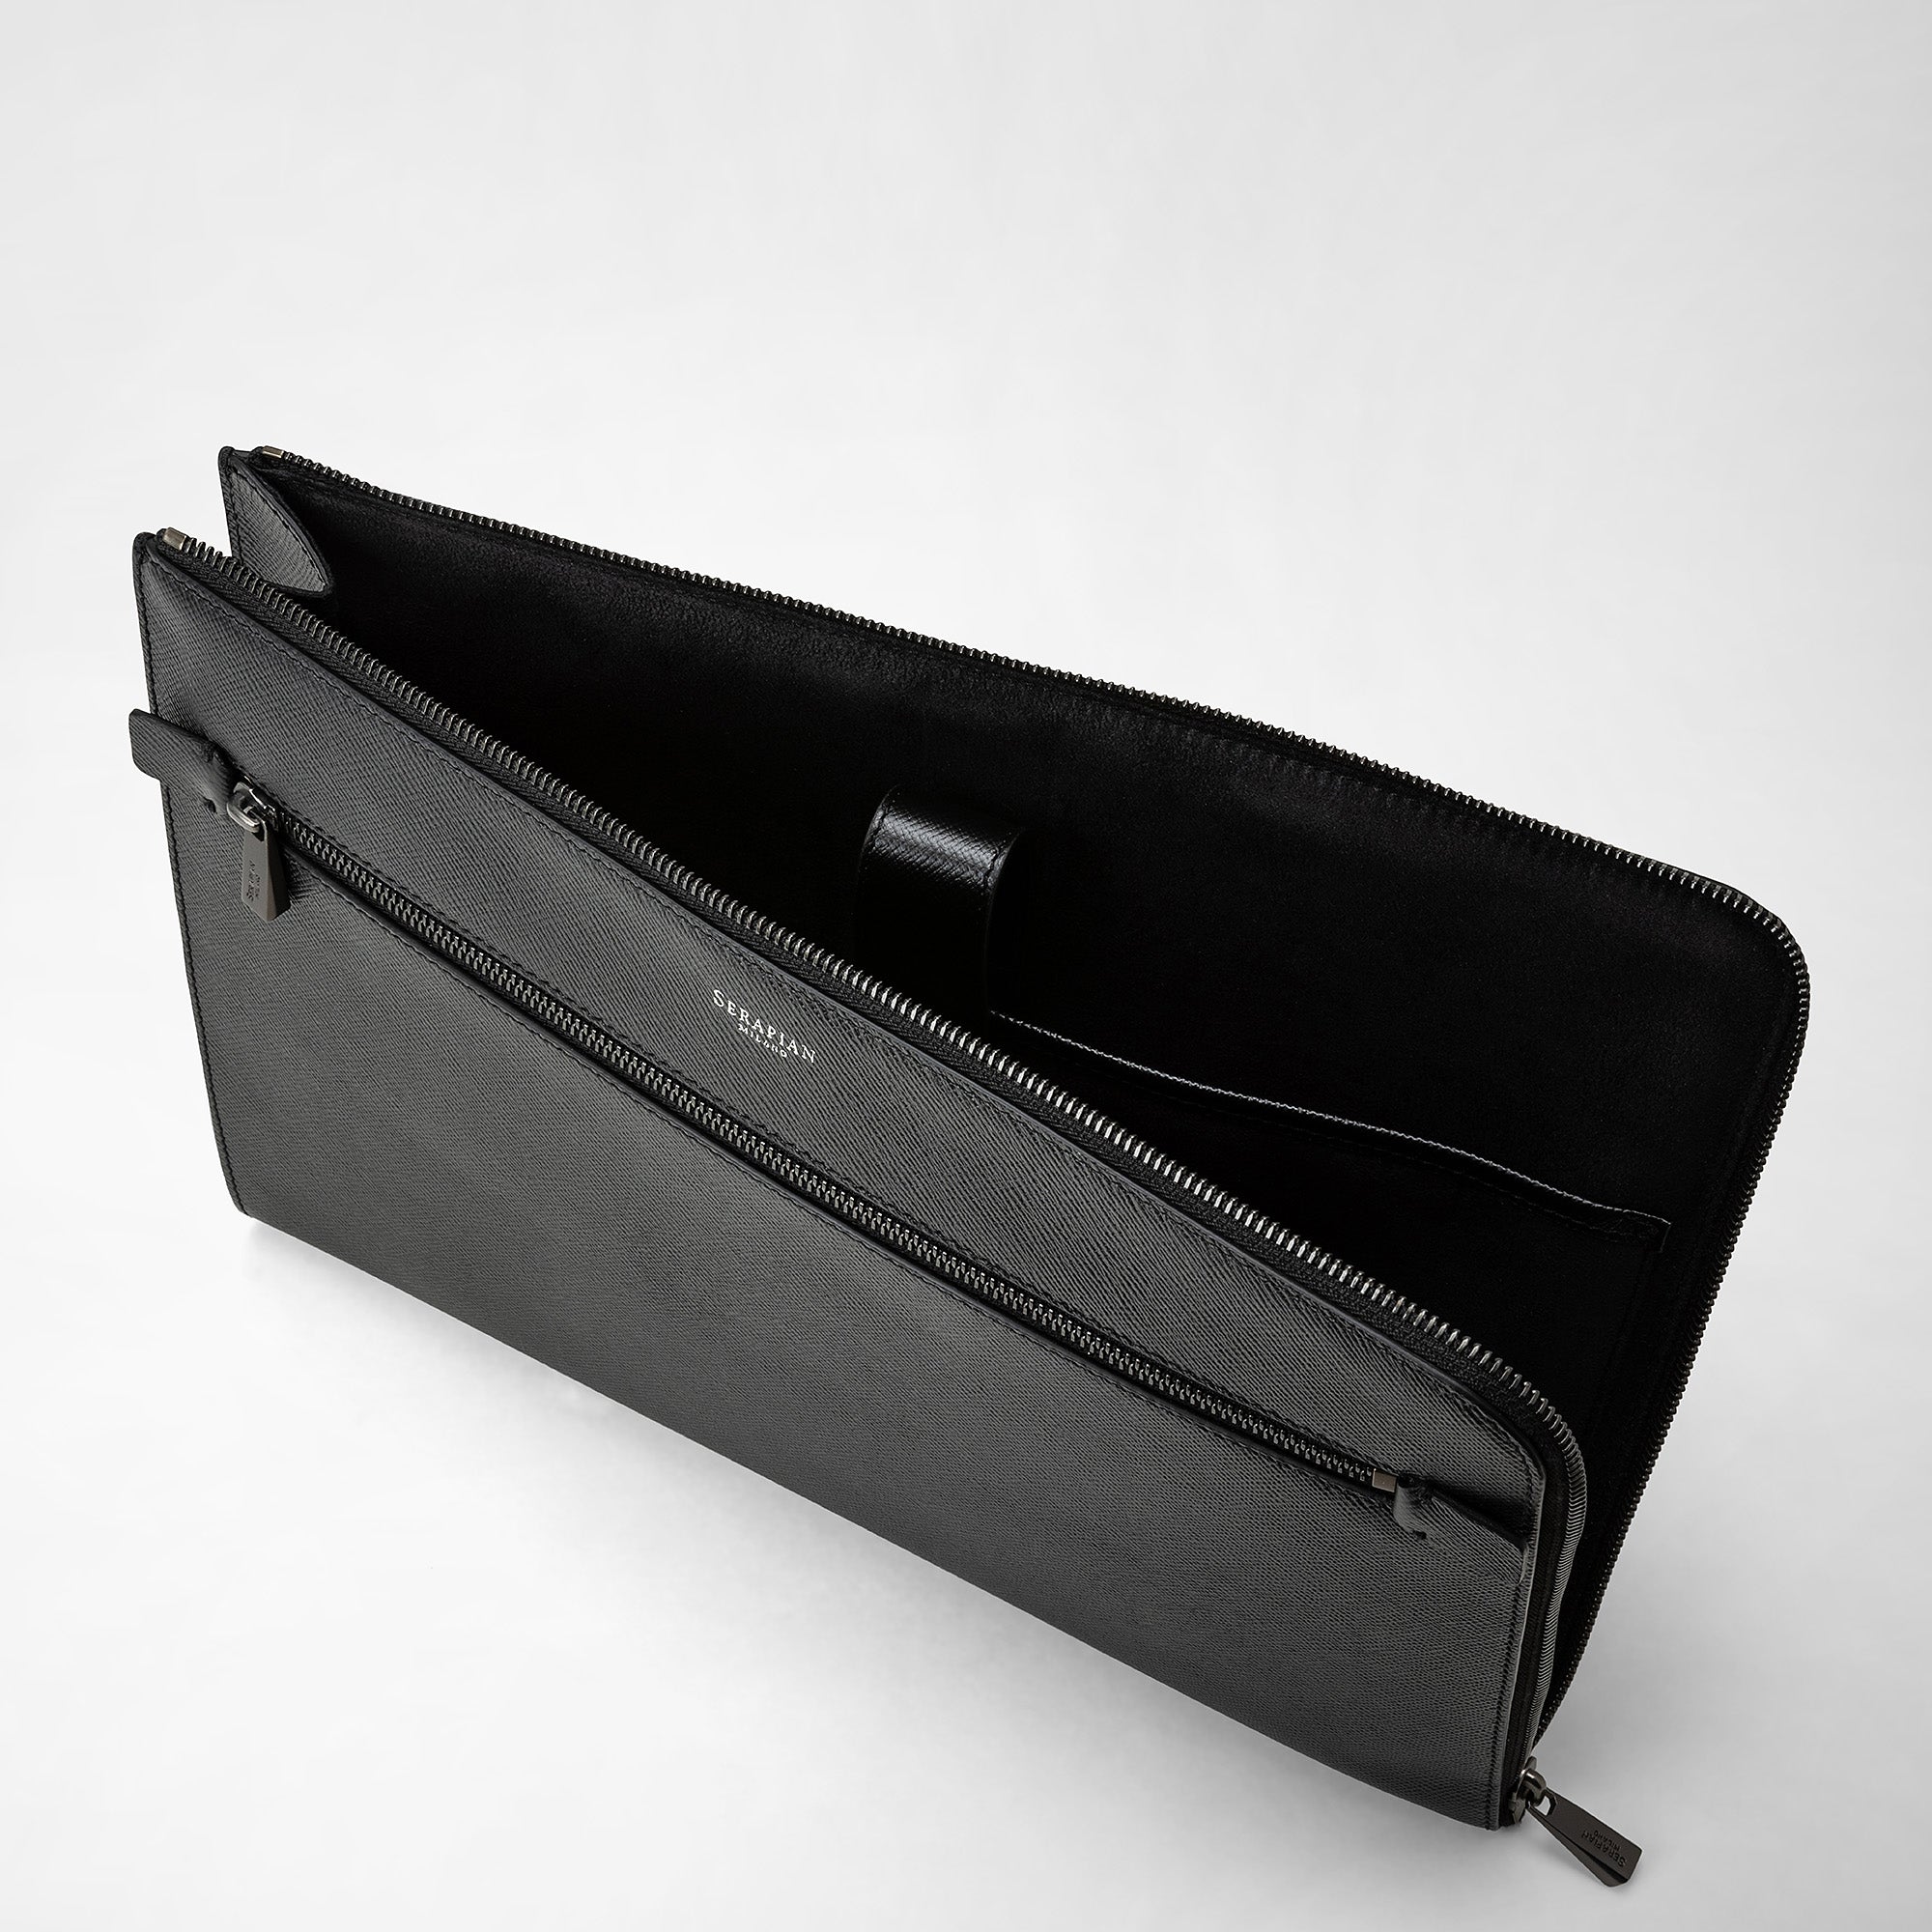 Picard Bags & Handbags - Men - 55 products